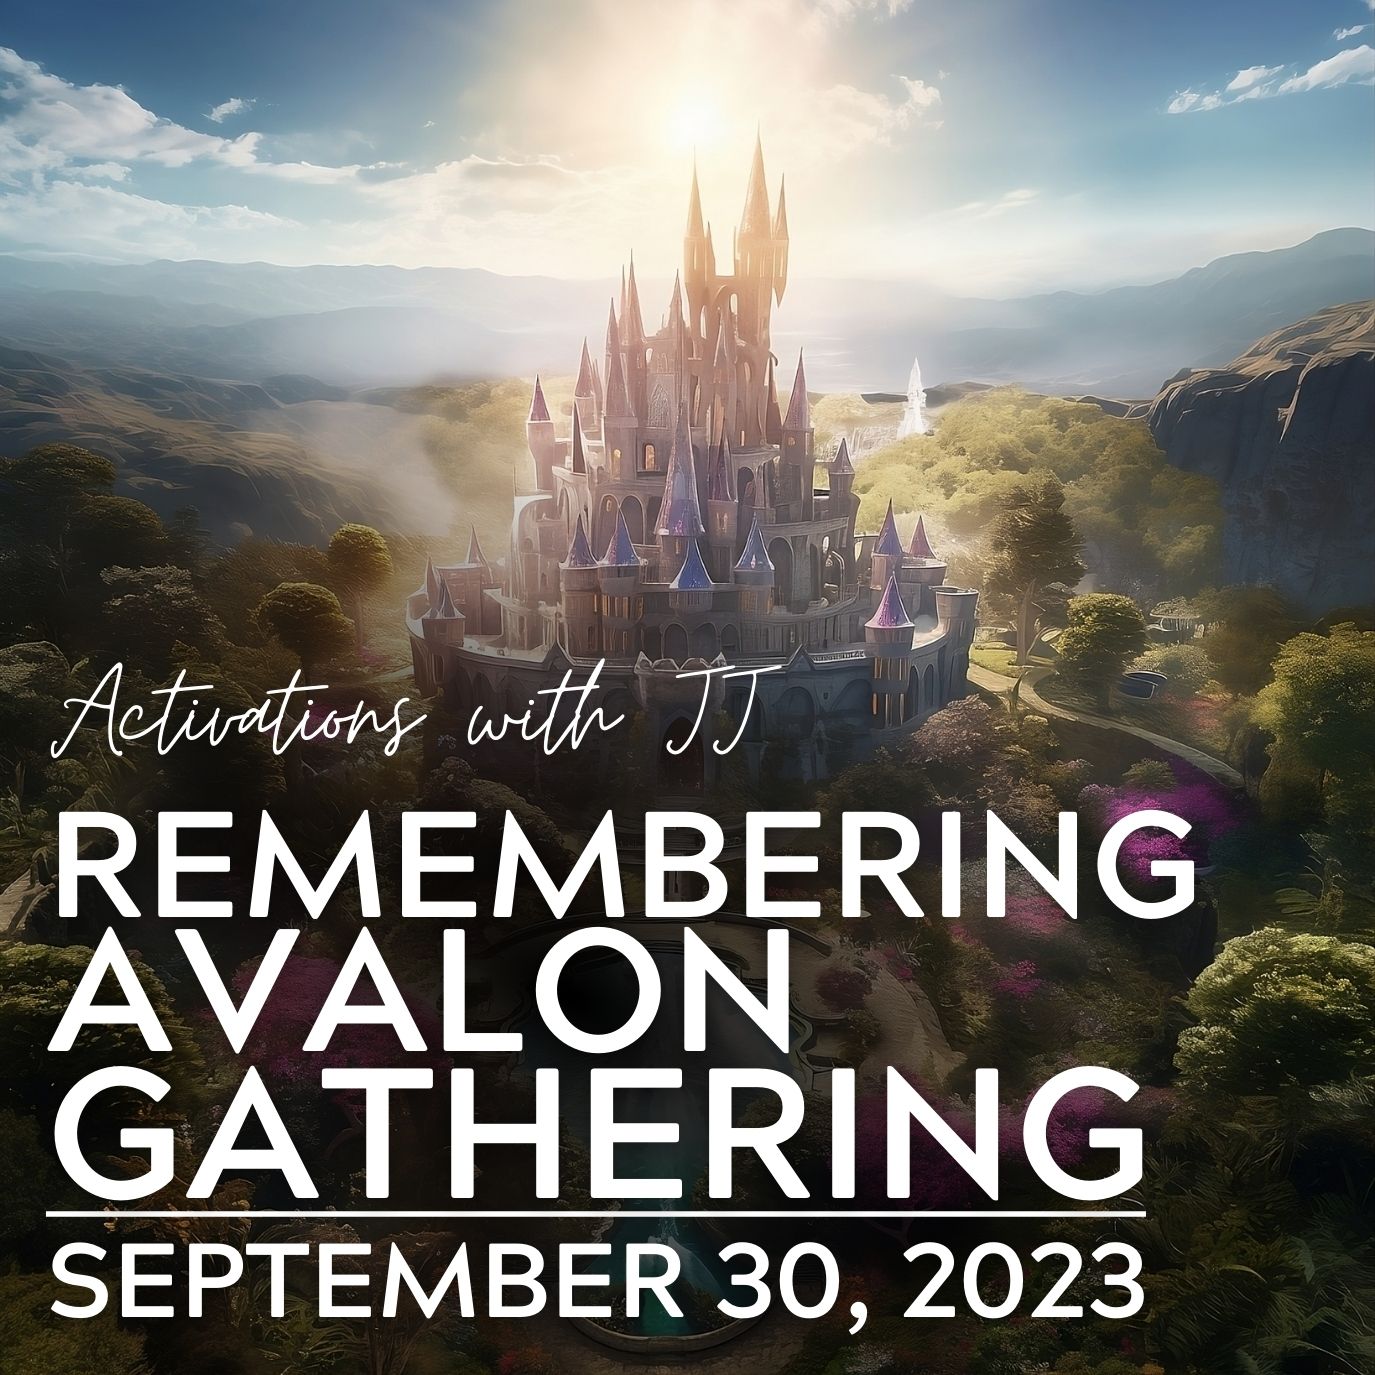 Remembering Avalon Gathering (MP3 Recording) | September 30, 2023